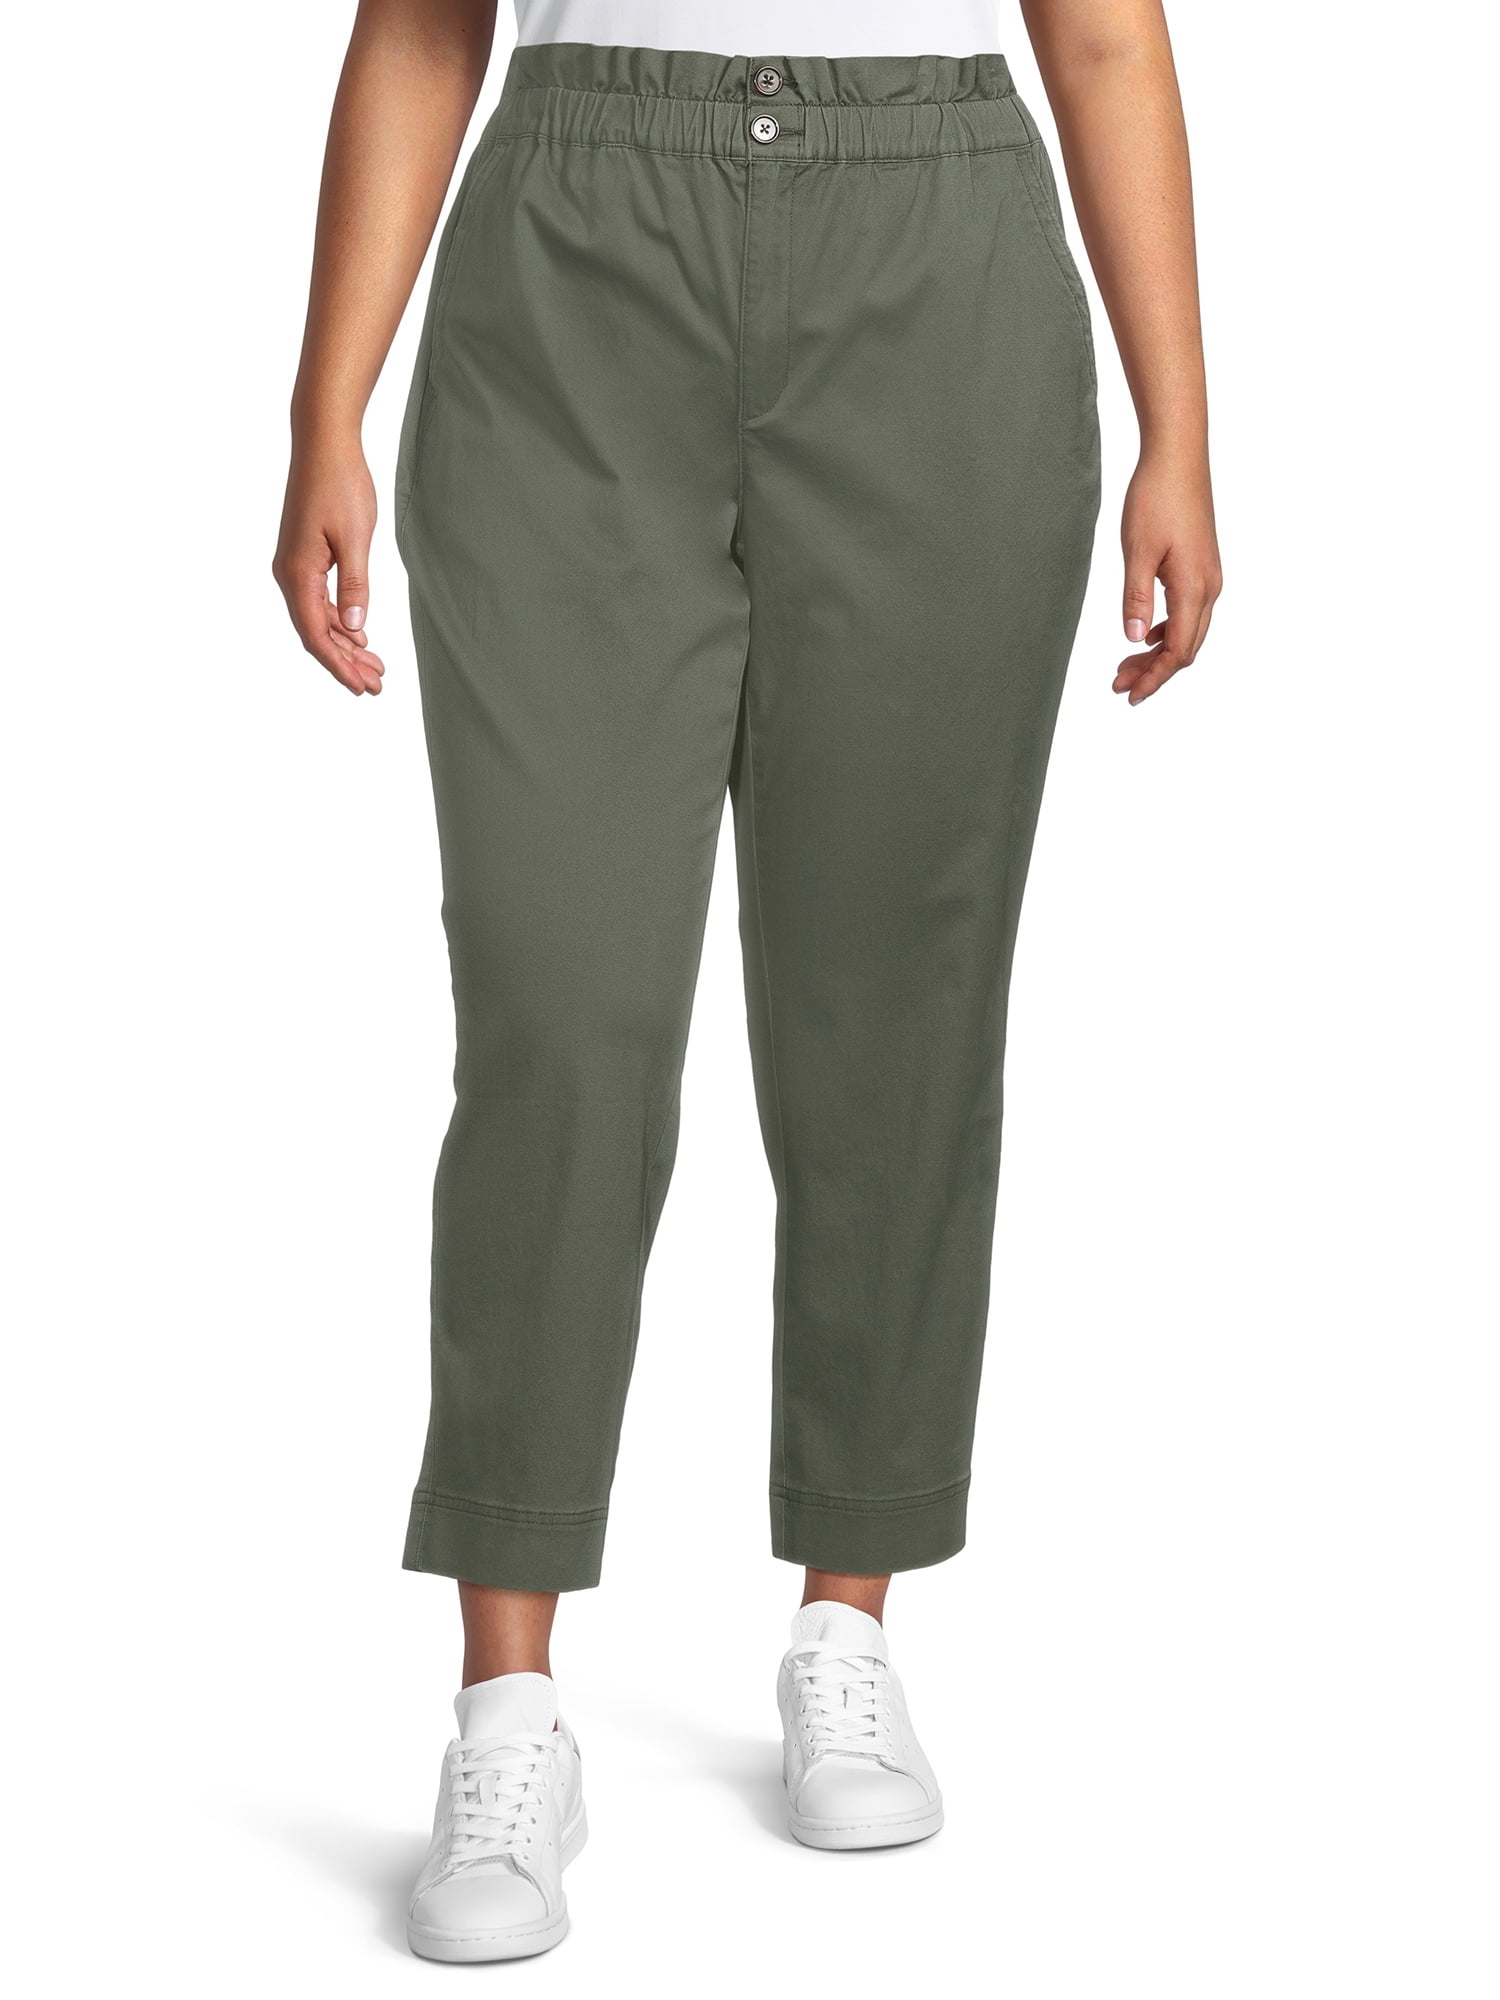 Terra & Sky Women's Plus Size High Rise Paperbag Pants - Walmart.com